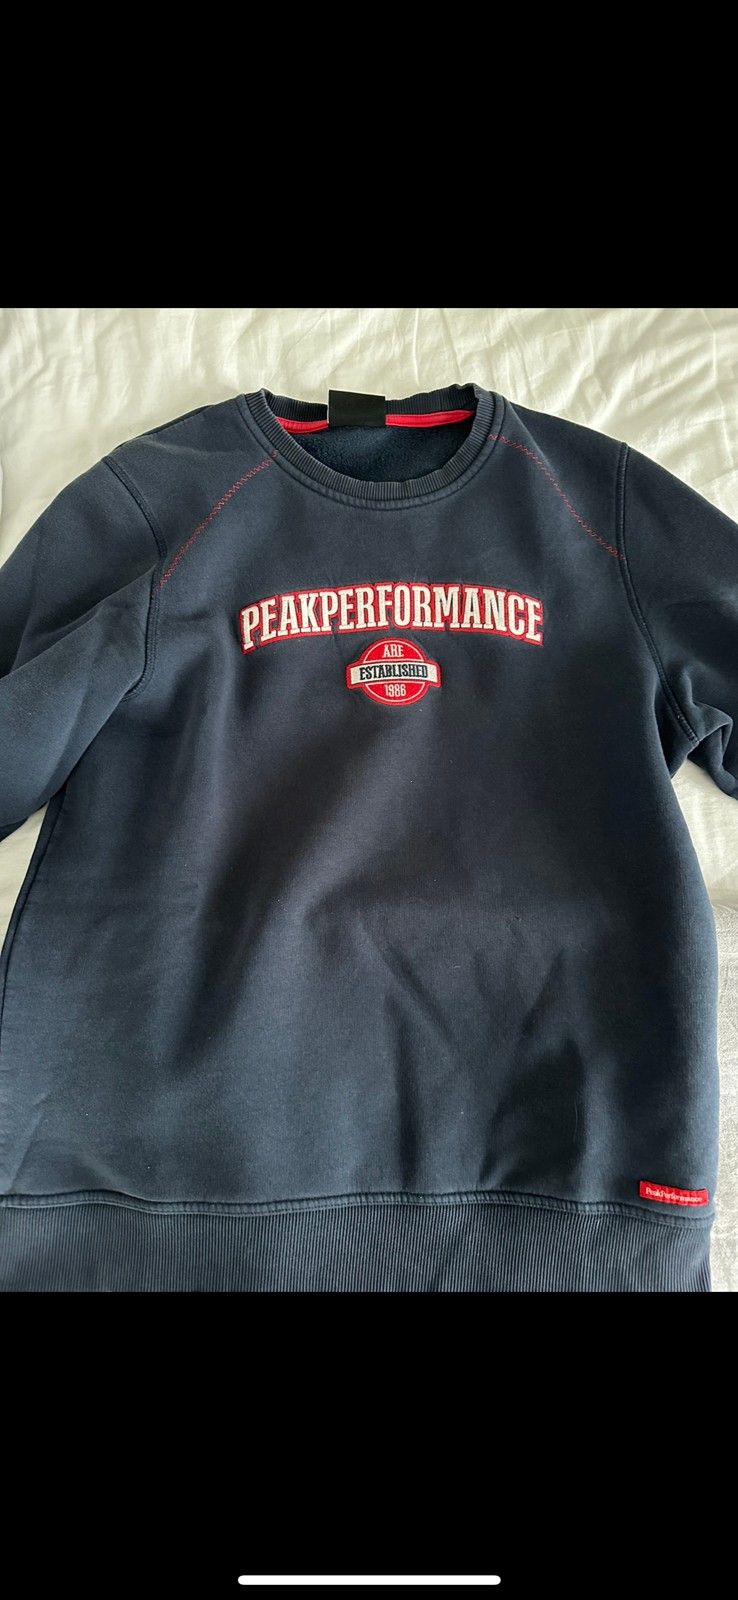 Peak performance college